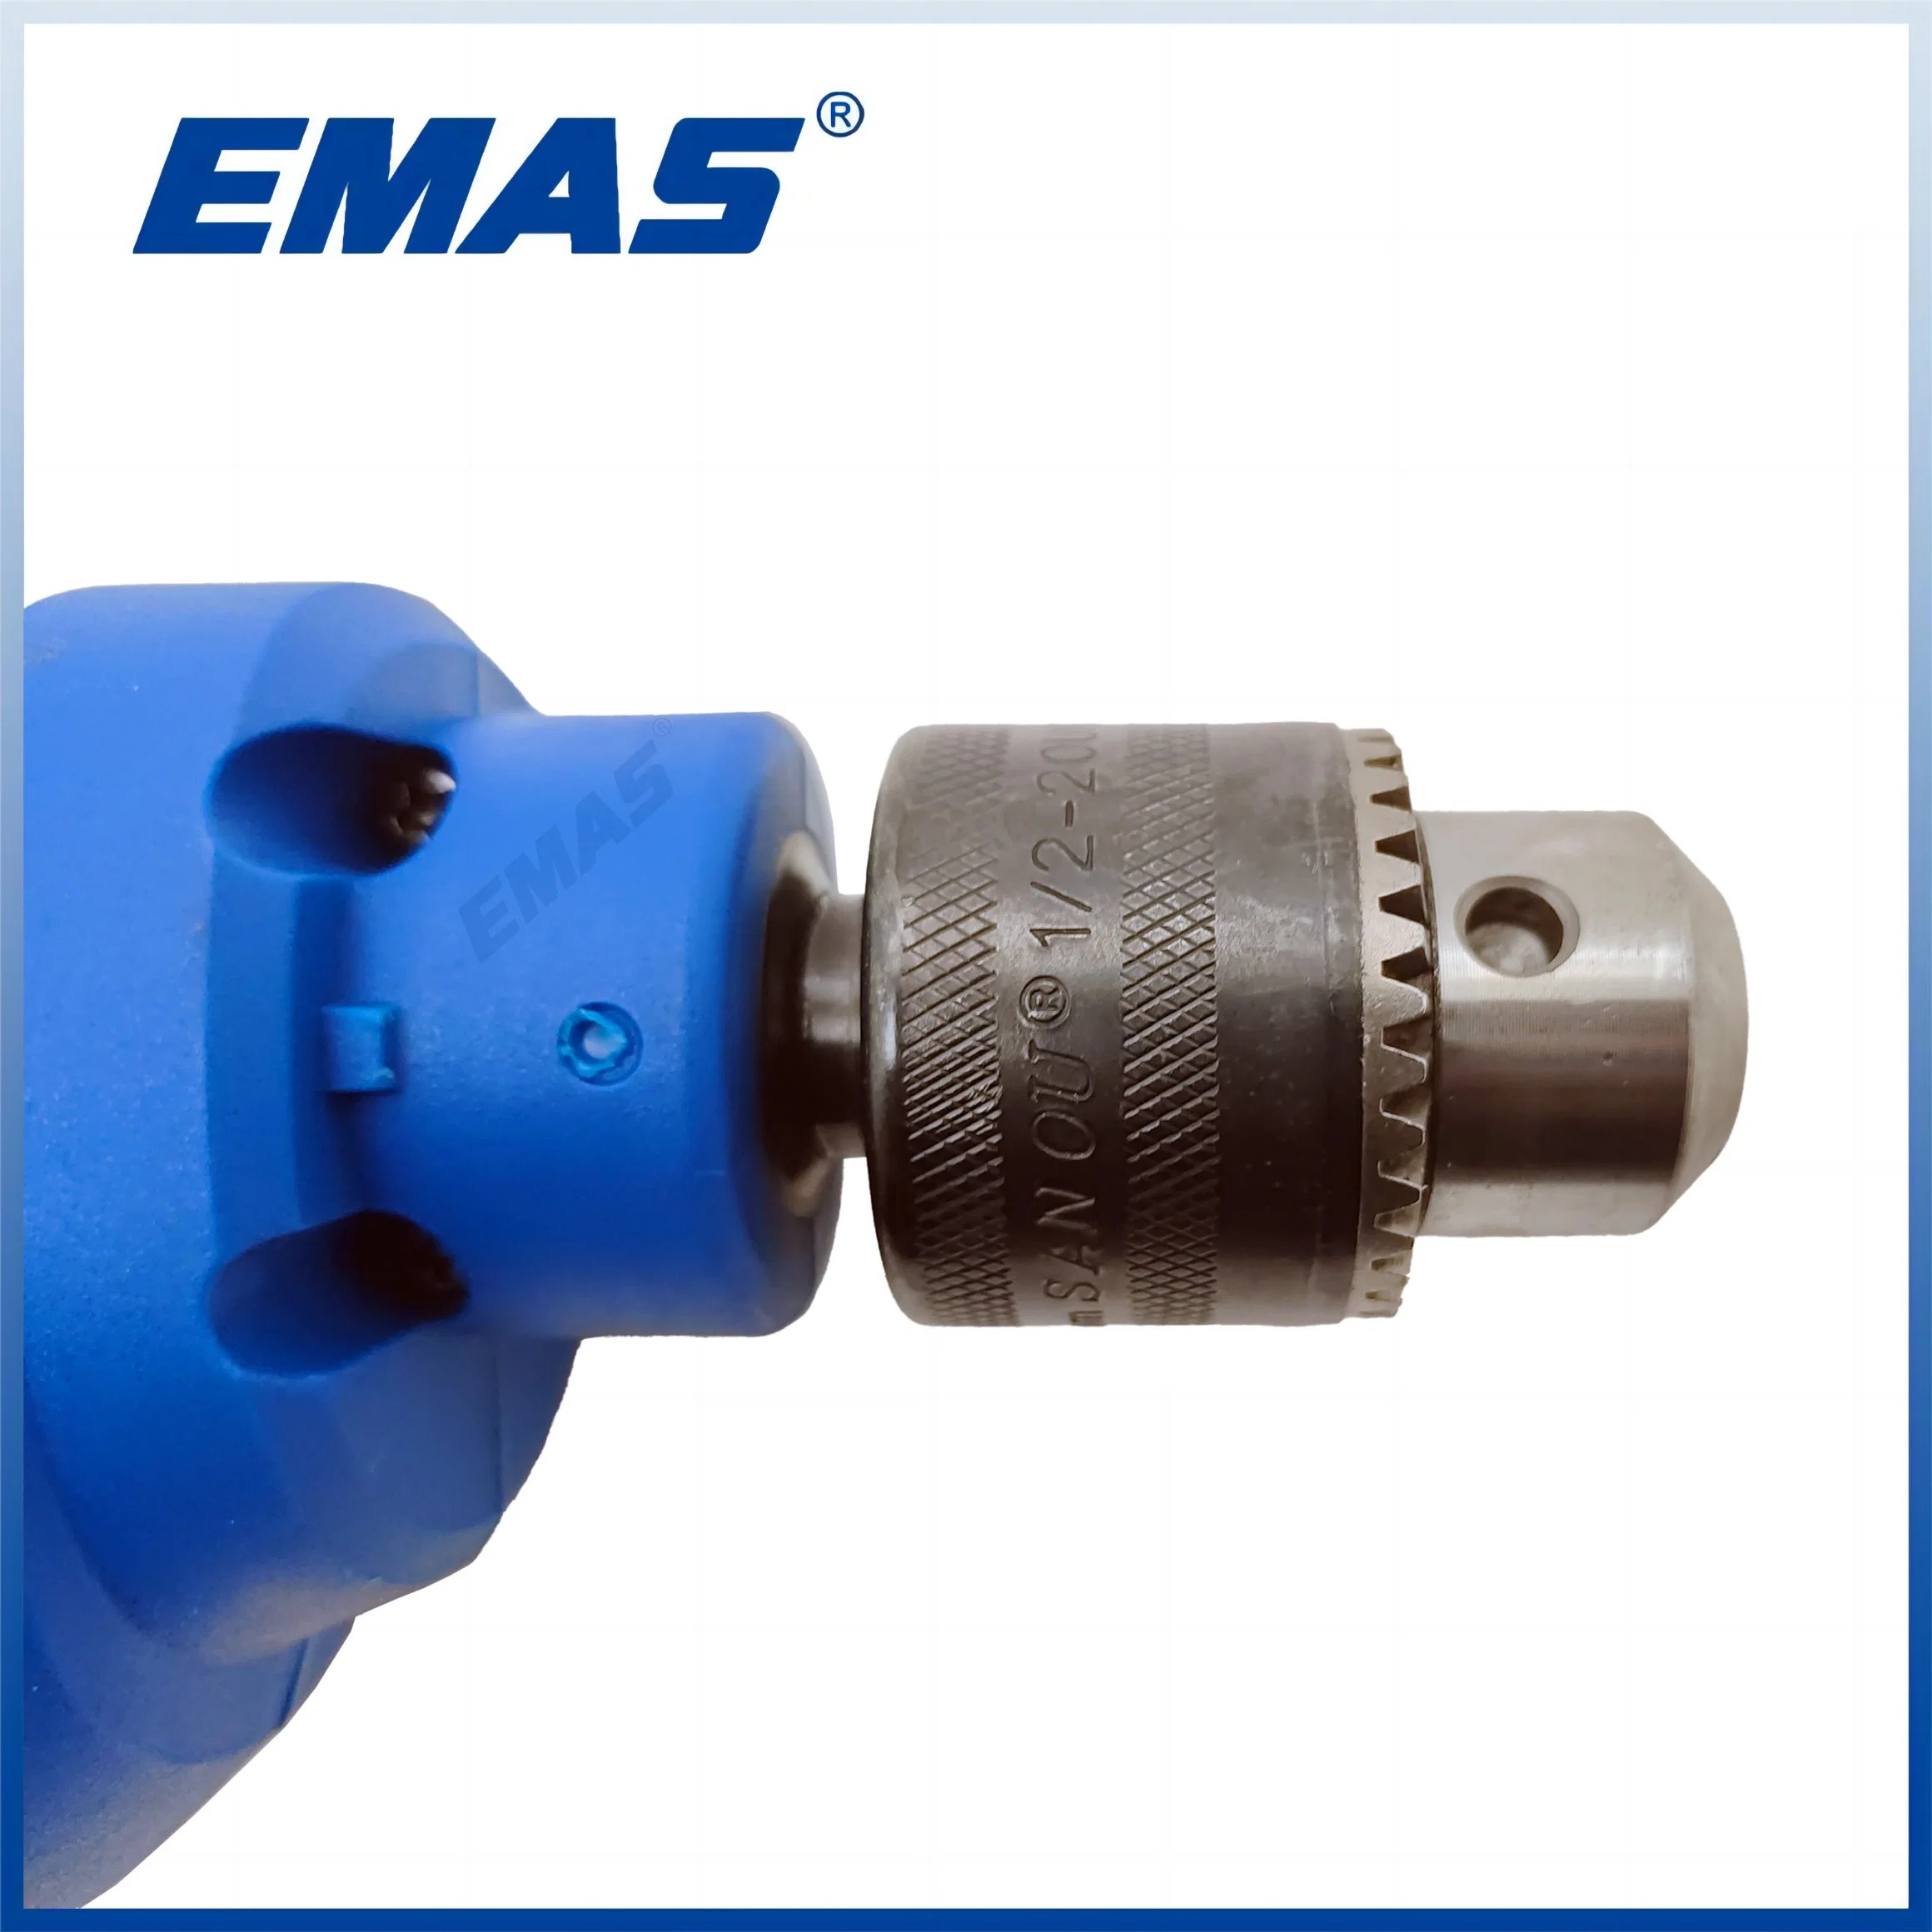 EMAS Power Tools 220V taladro eléctrico 650W taladro de impacto 13mm